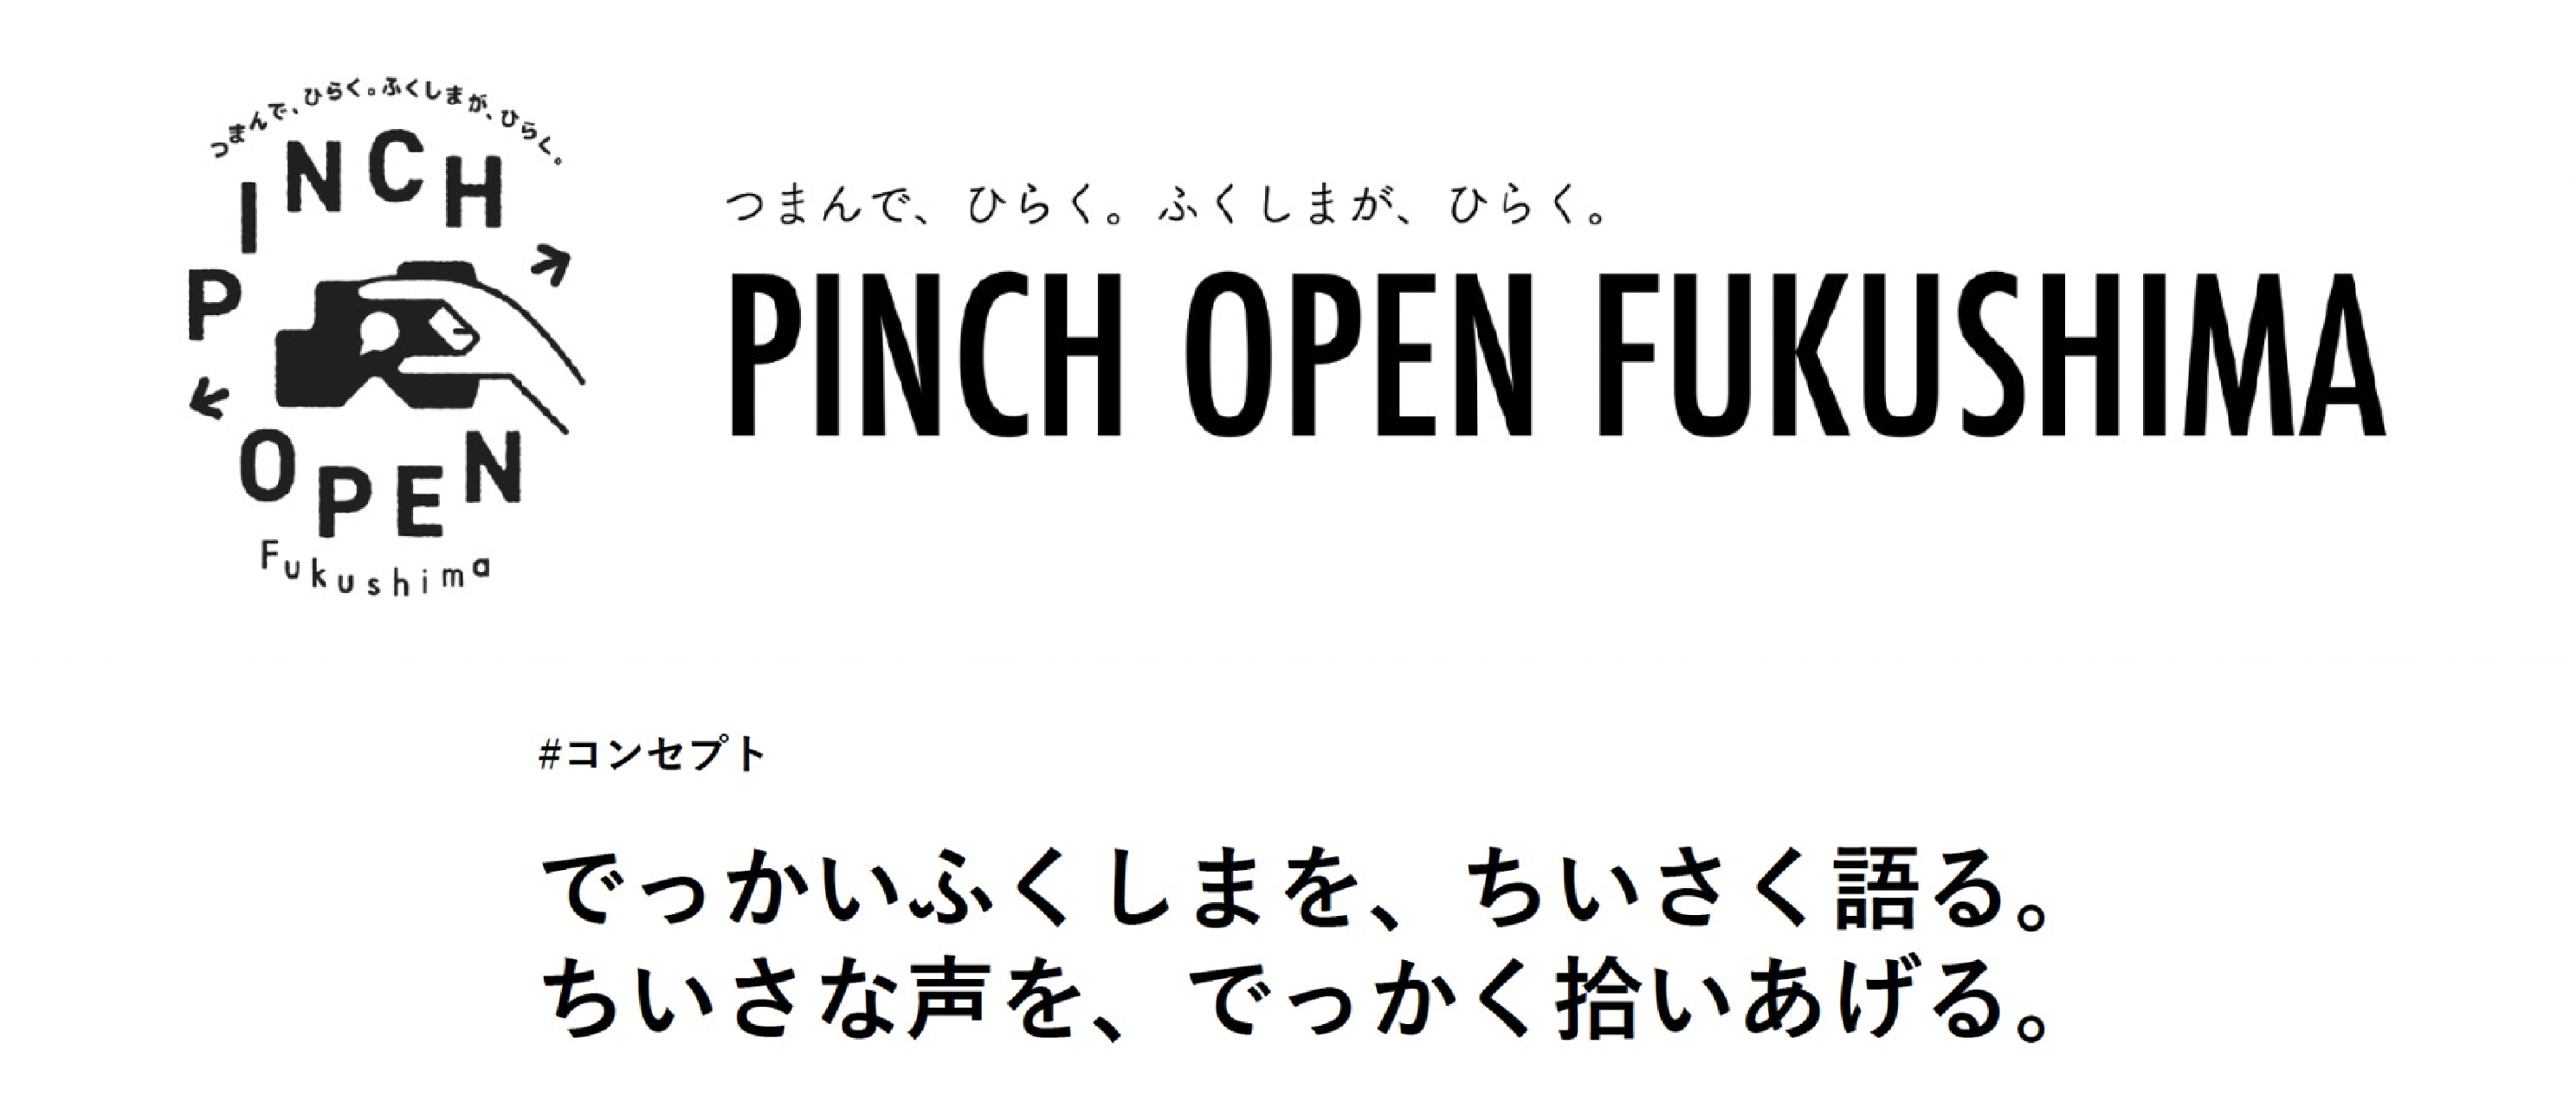 PINCH OPEN FUKUSHIMA